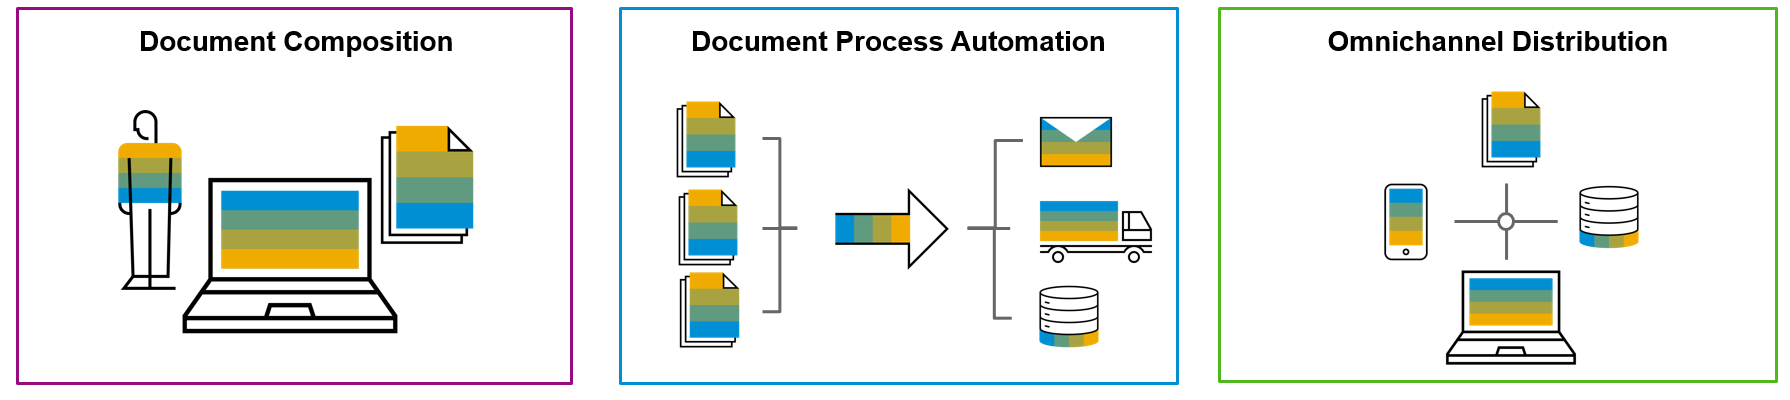 SAP Document Presentment by OpenText